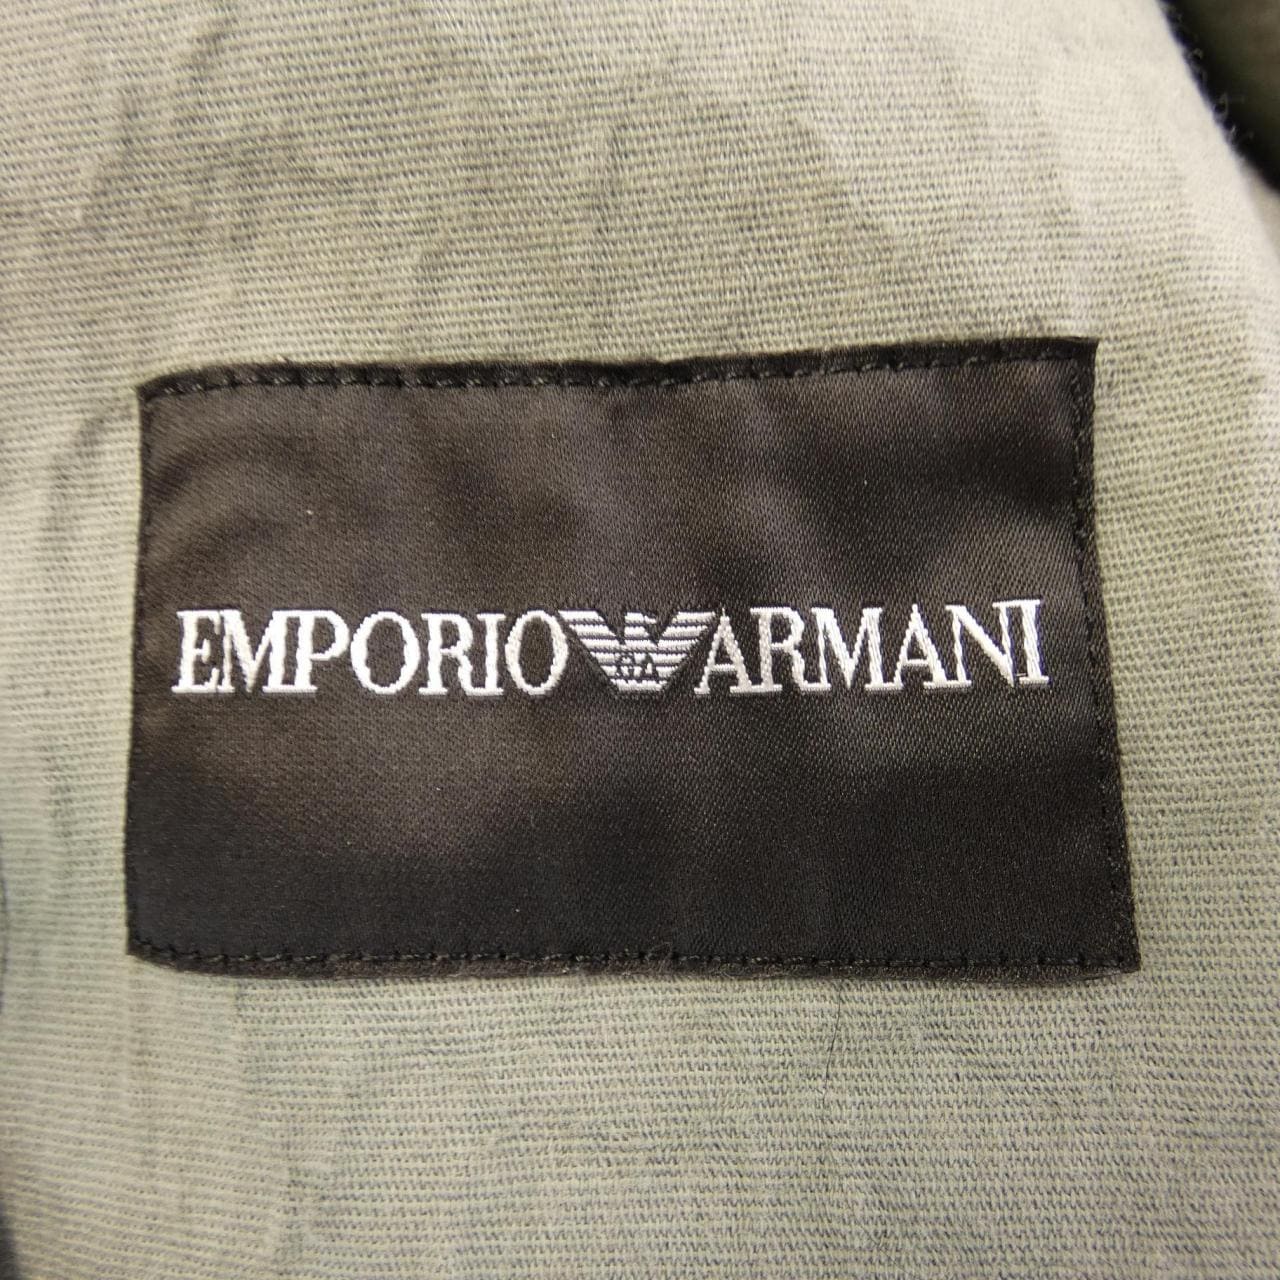 EMPORIO ARMANI EMPORIO ARMANI 骑士夹克